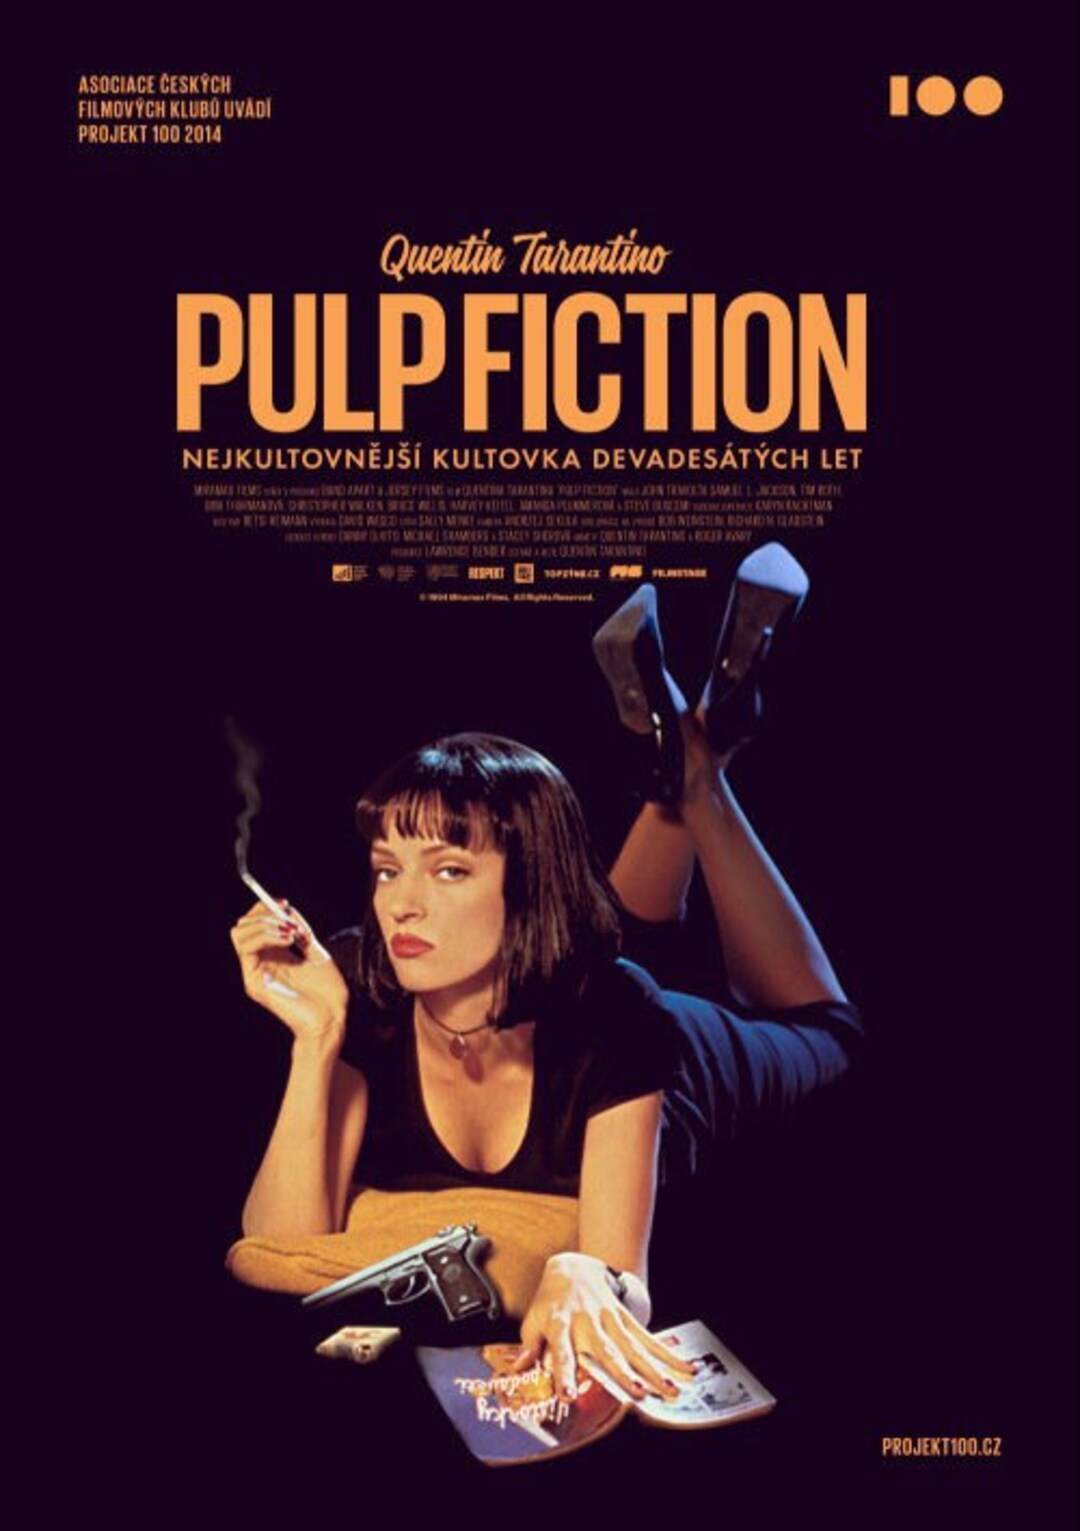 PULP FICTION - Signed Poster + COA – Poster Memorabilia